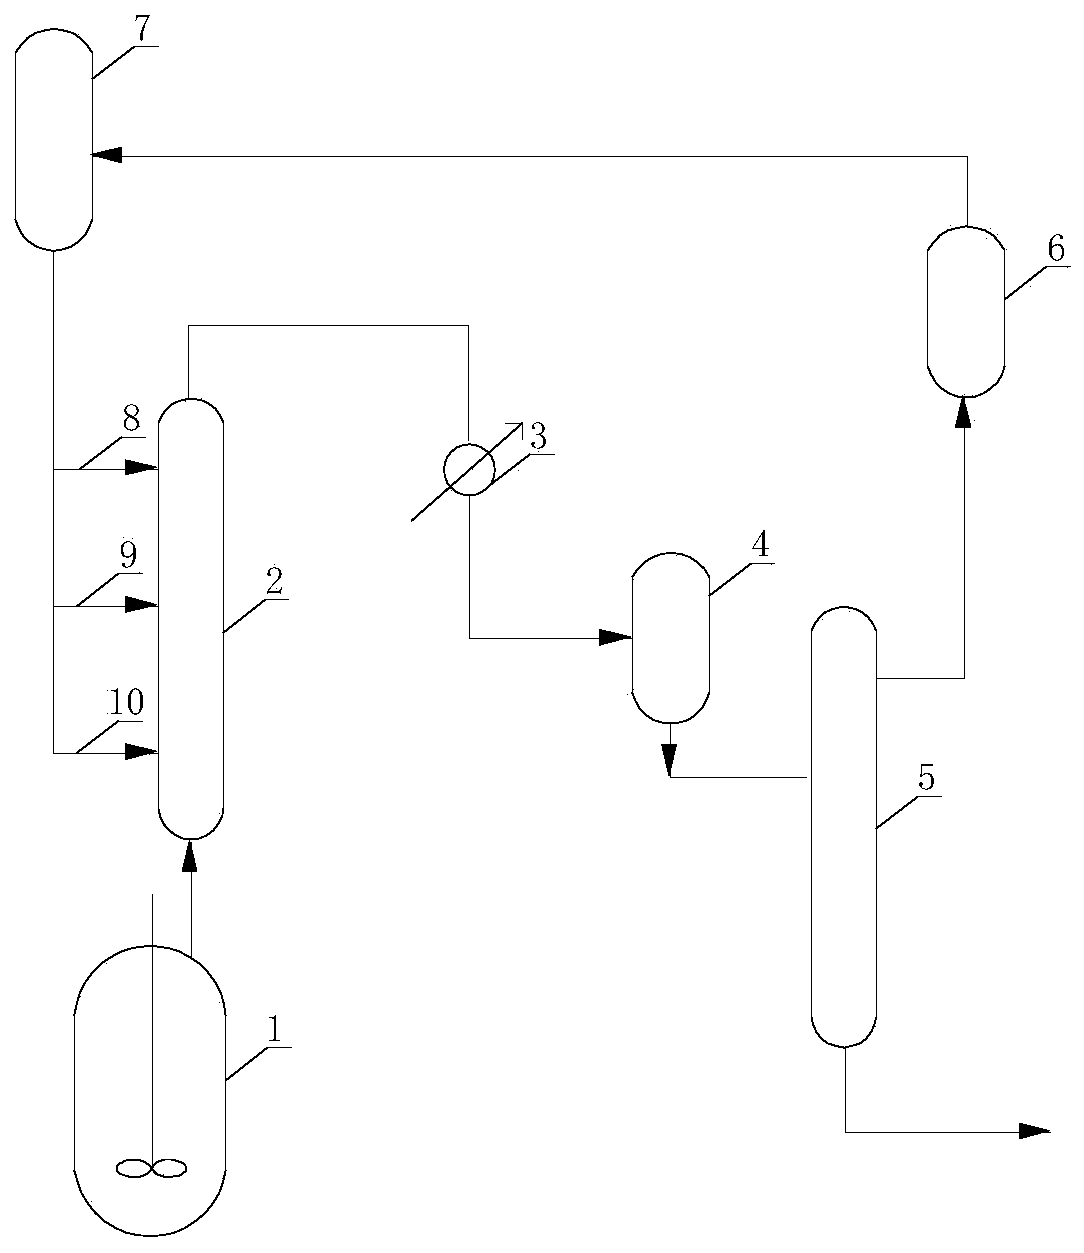 Ester-exchange reaction device